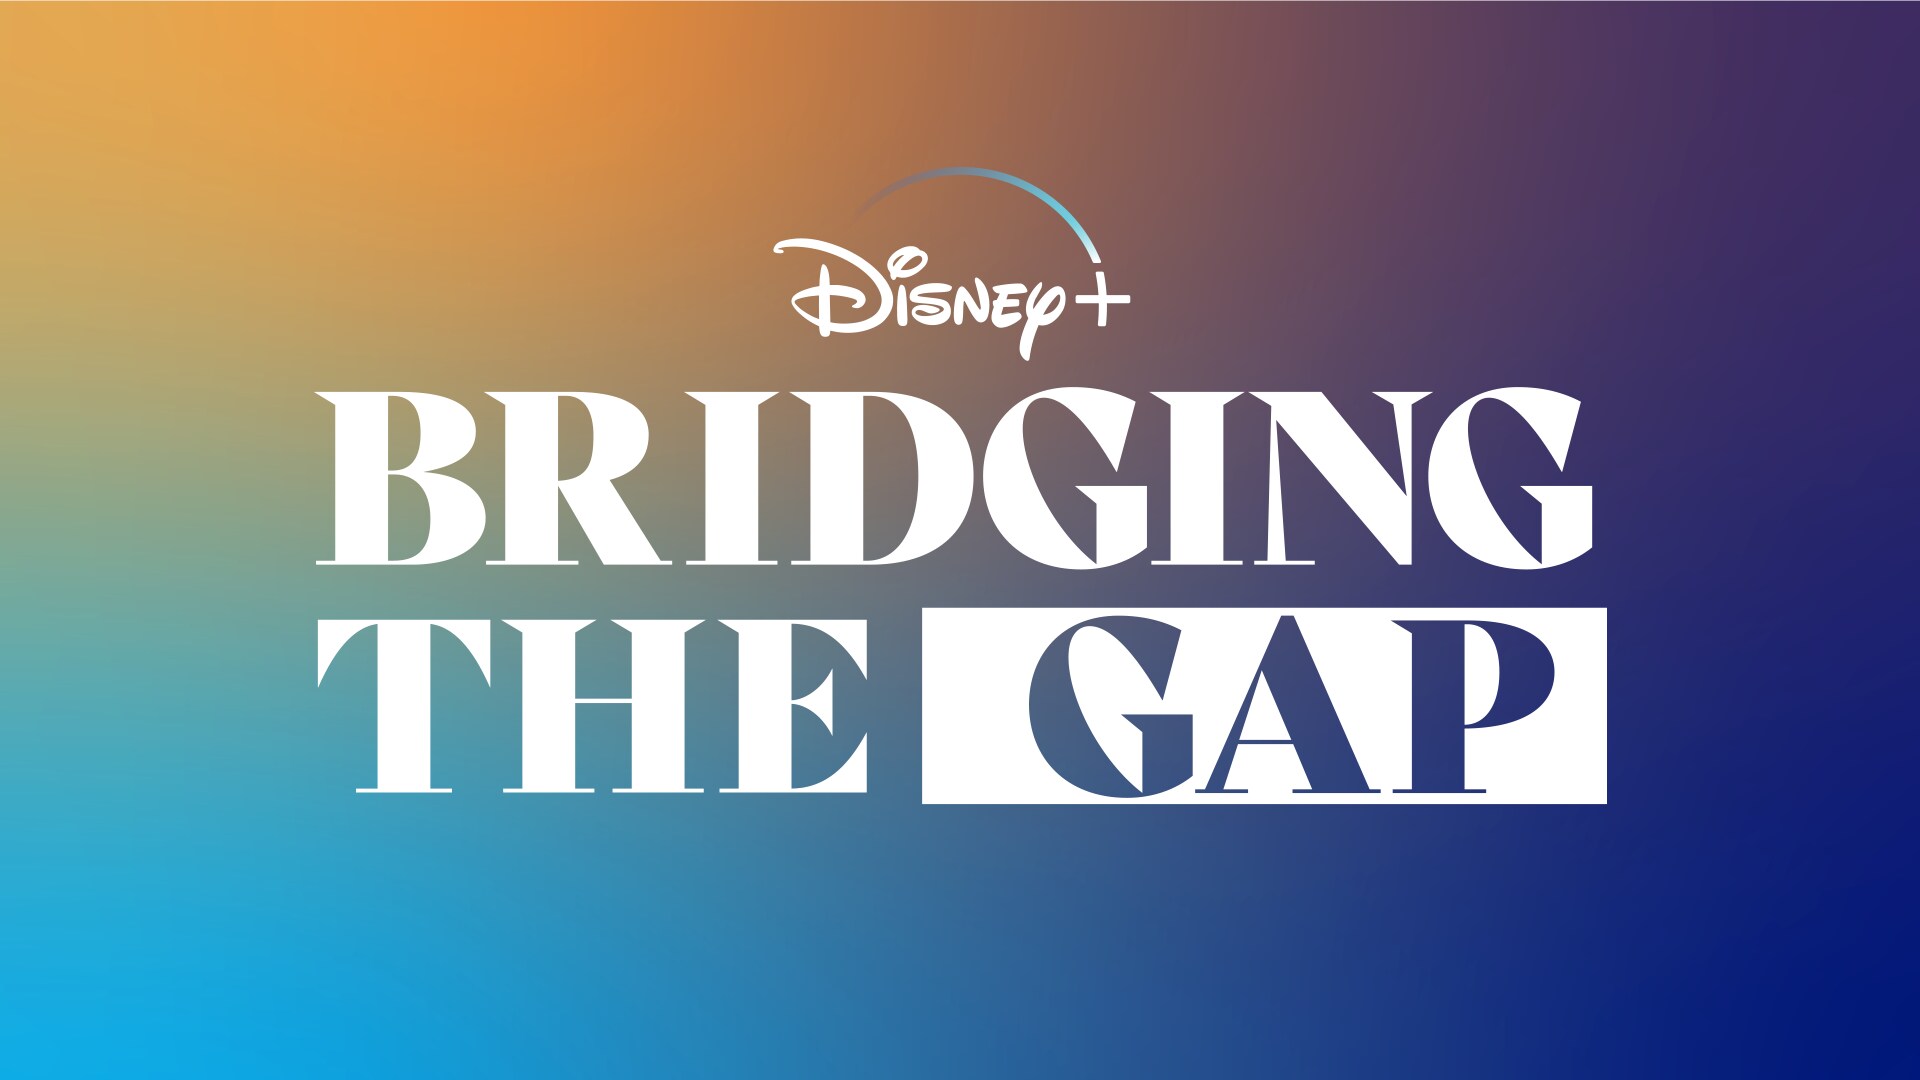 Disney+: Bridging the Gap | Trailer | Disney+ YouTube